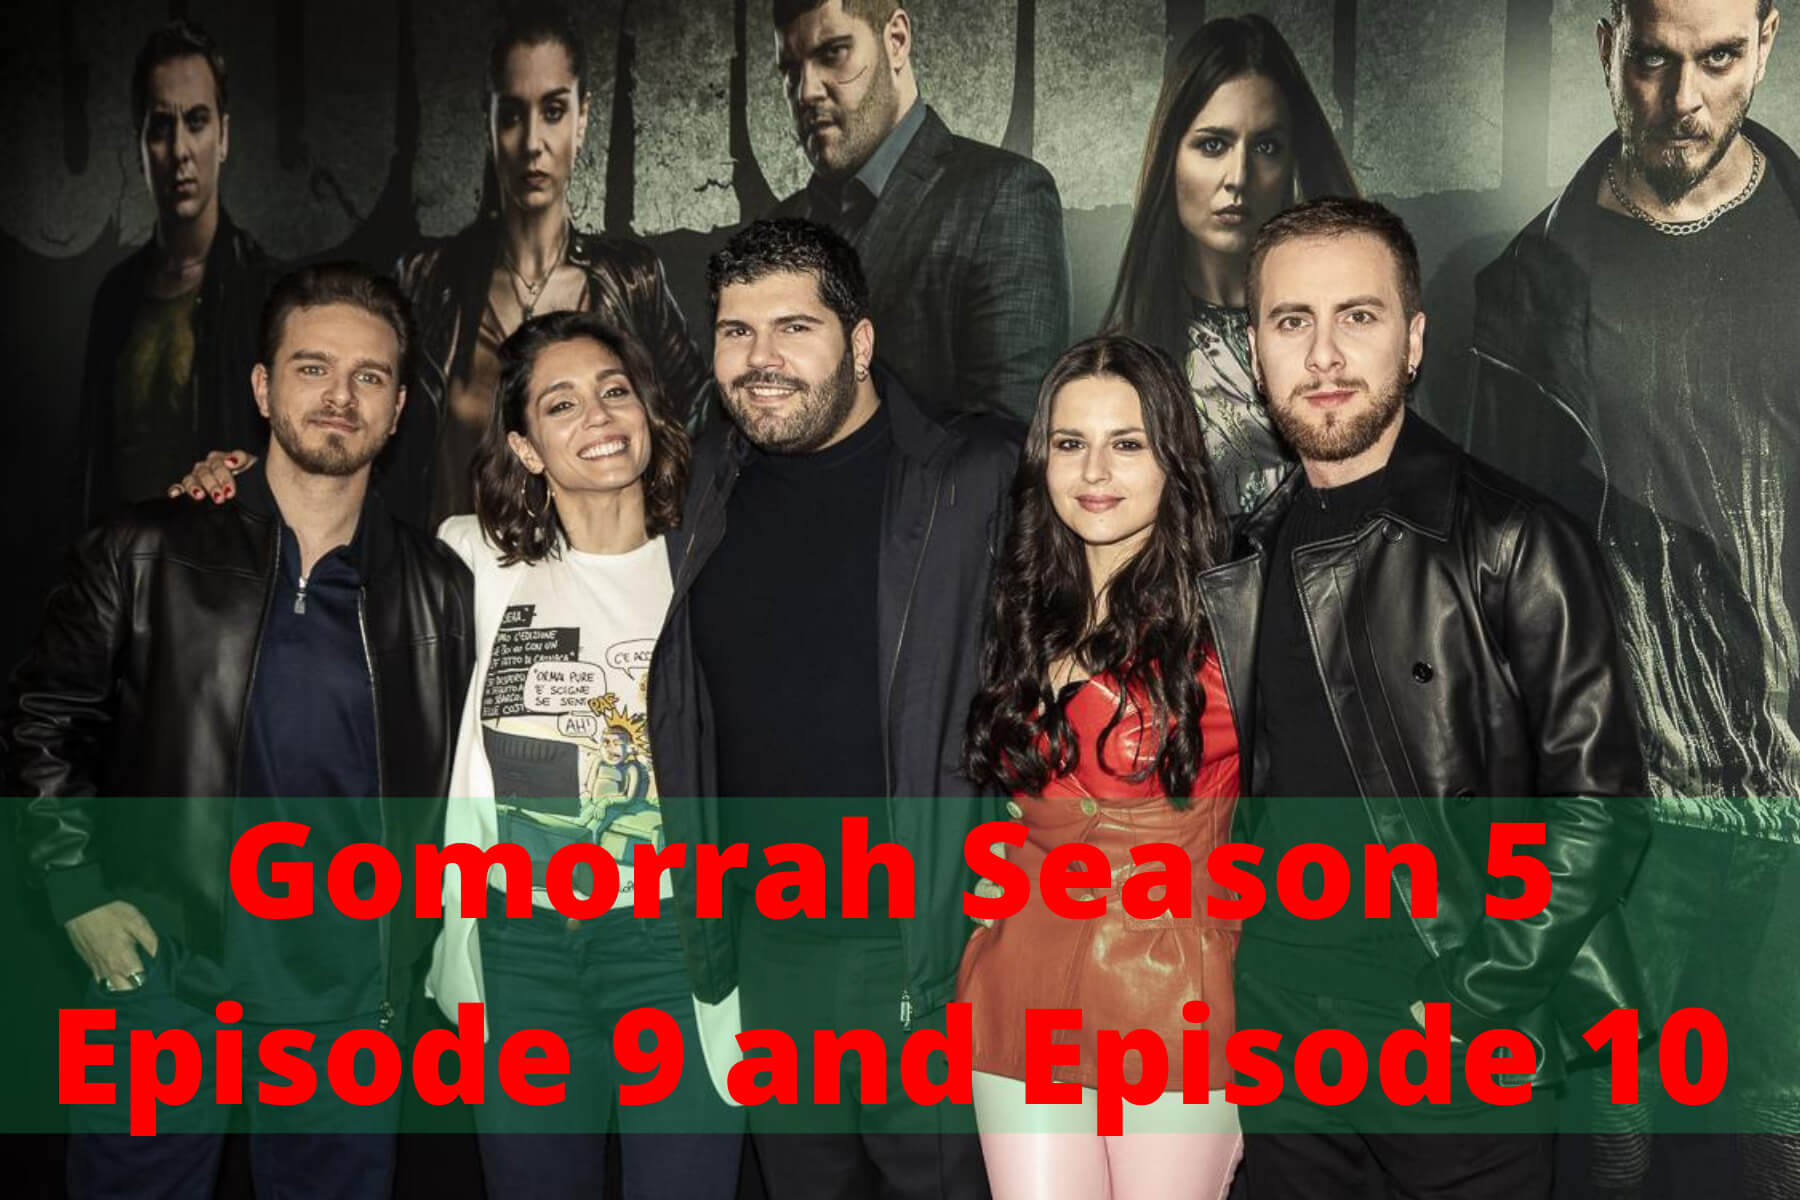 Gomorrah Season 5 Episode 9 and Episode 10 (1)Gomorrah Season 5 Episode 9 and Episode 10 (1)